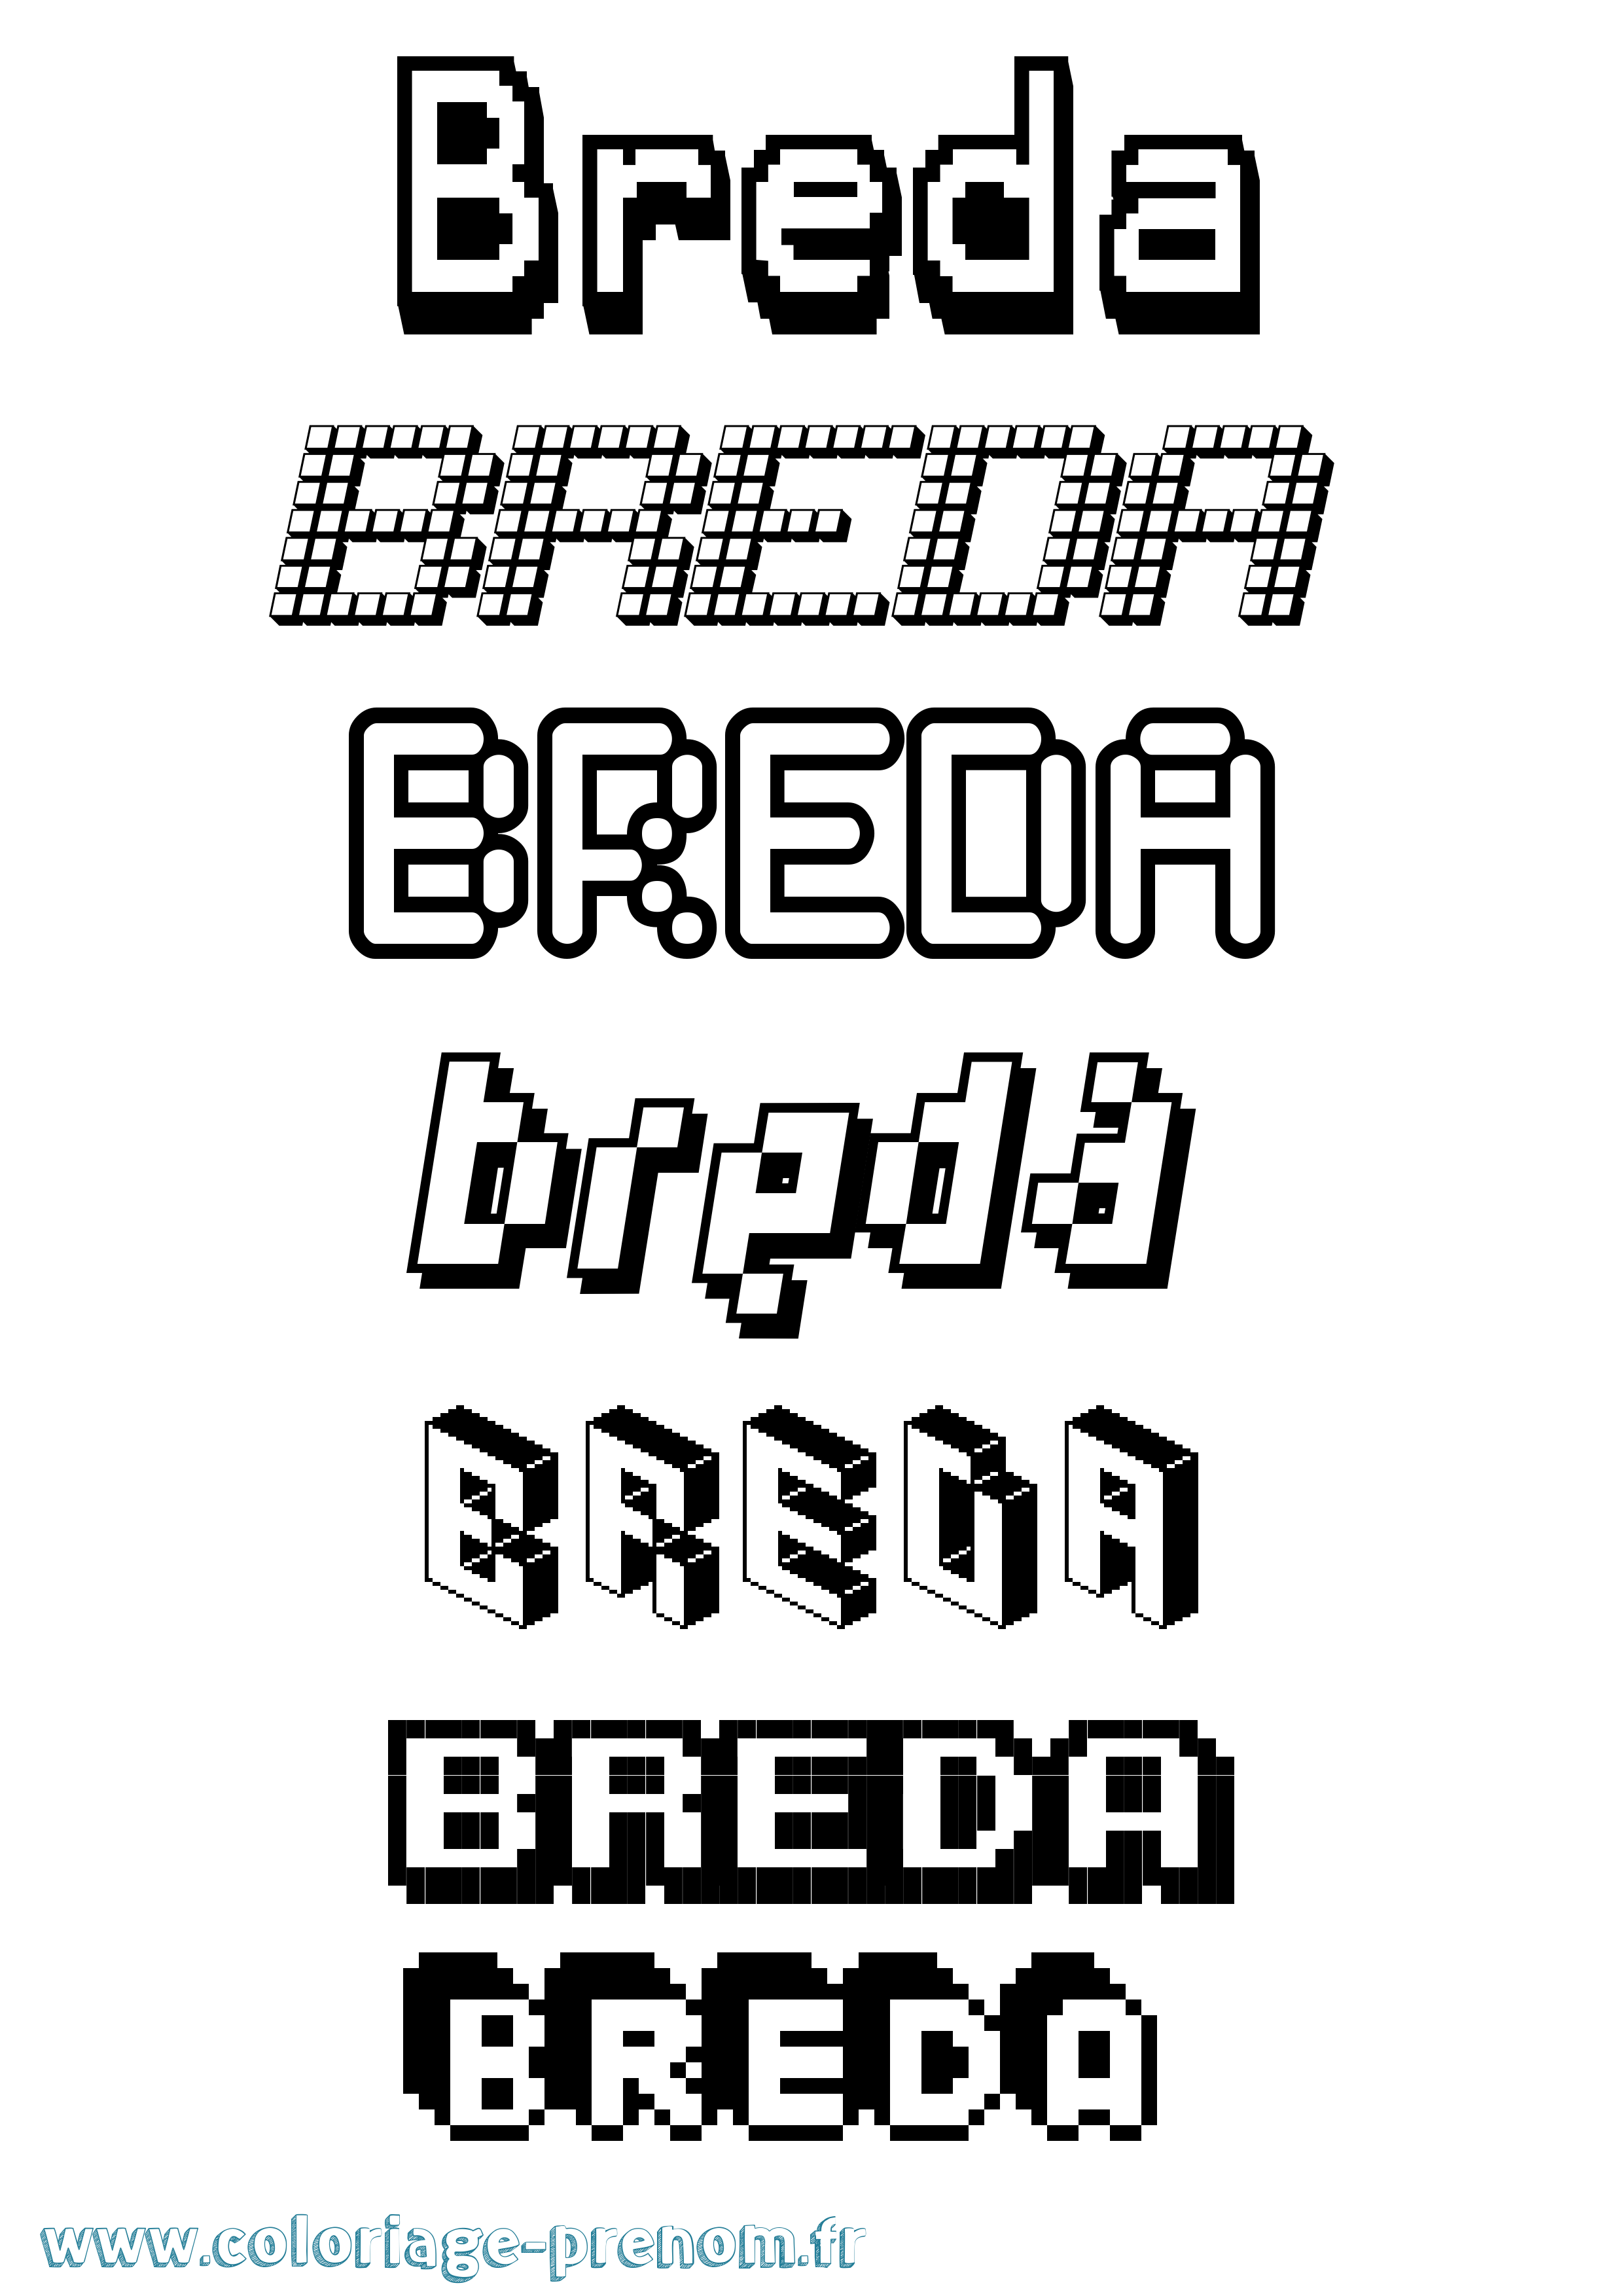 Coloriage prénom Breda Pixel